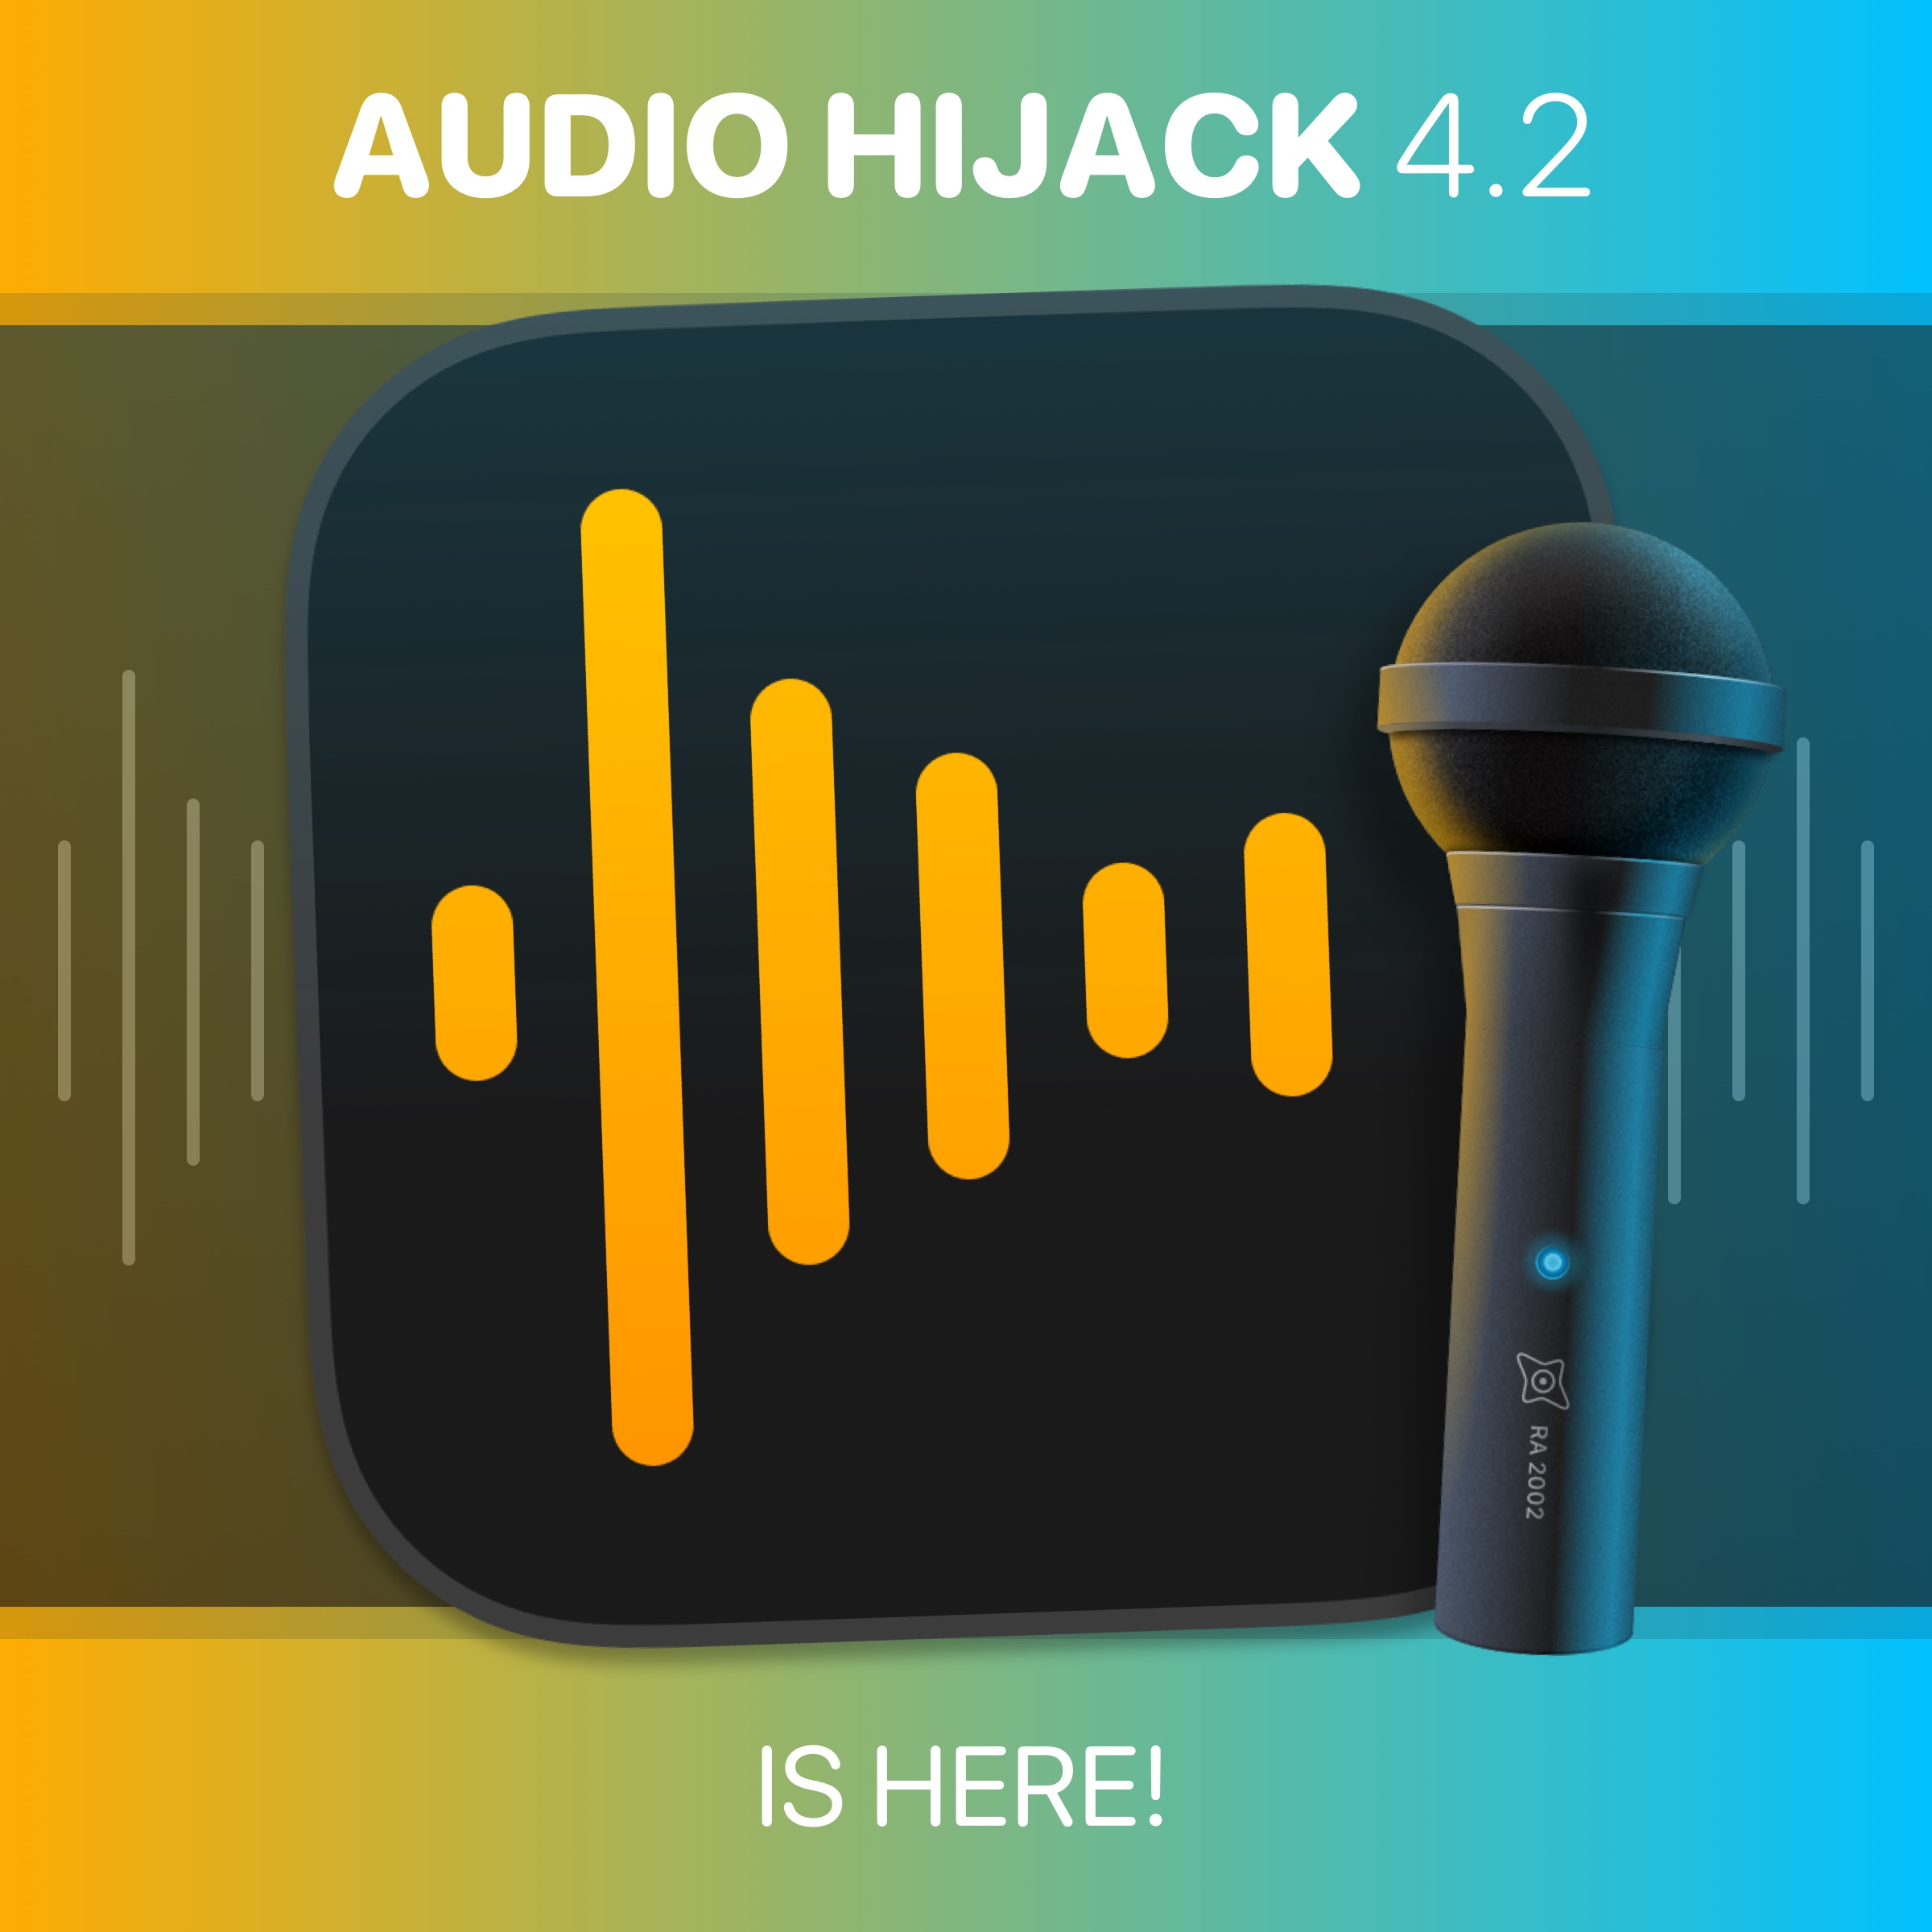 Audio Hijack 4.2 is here!